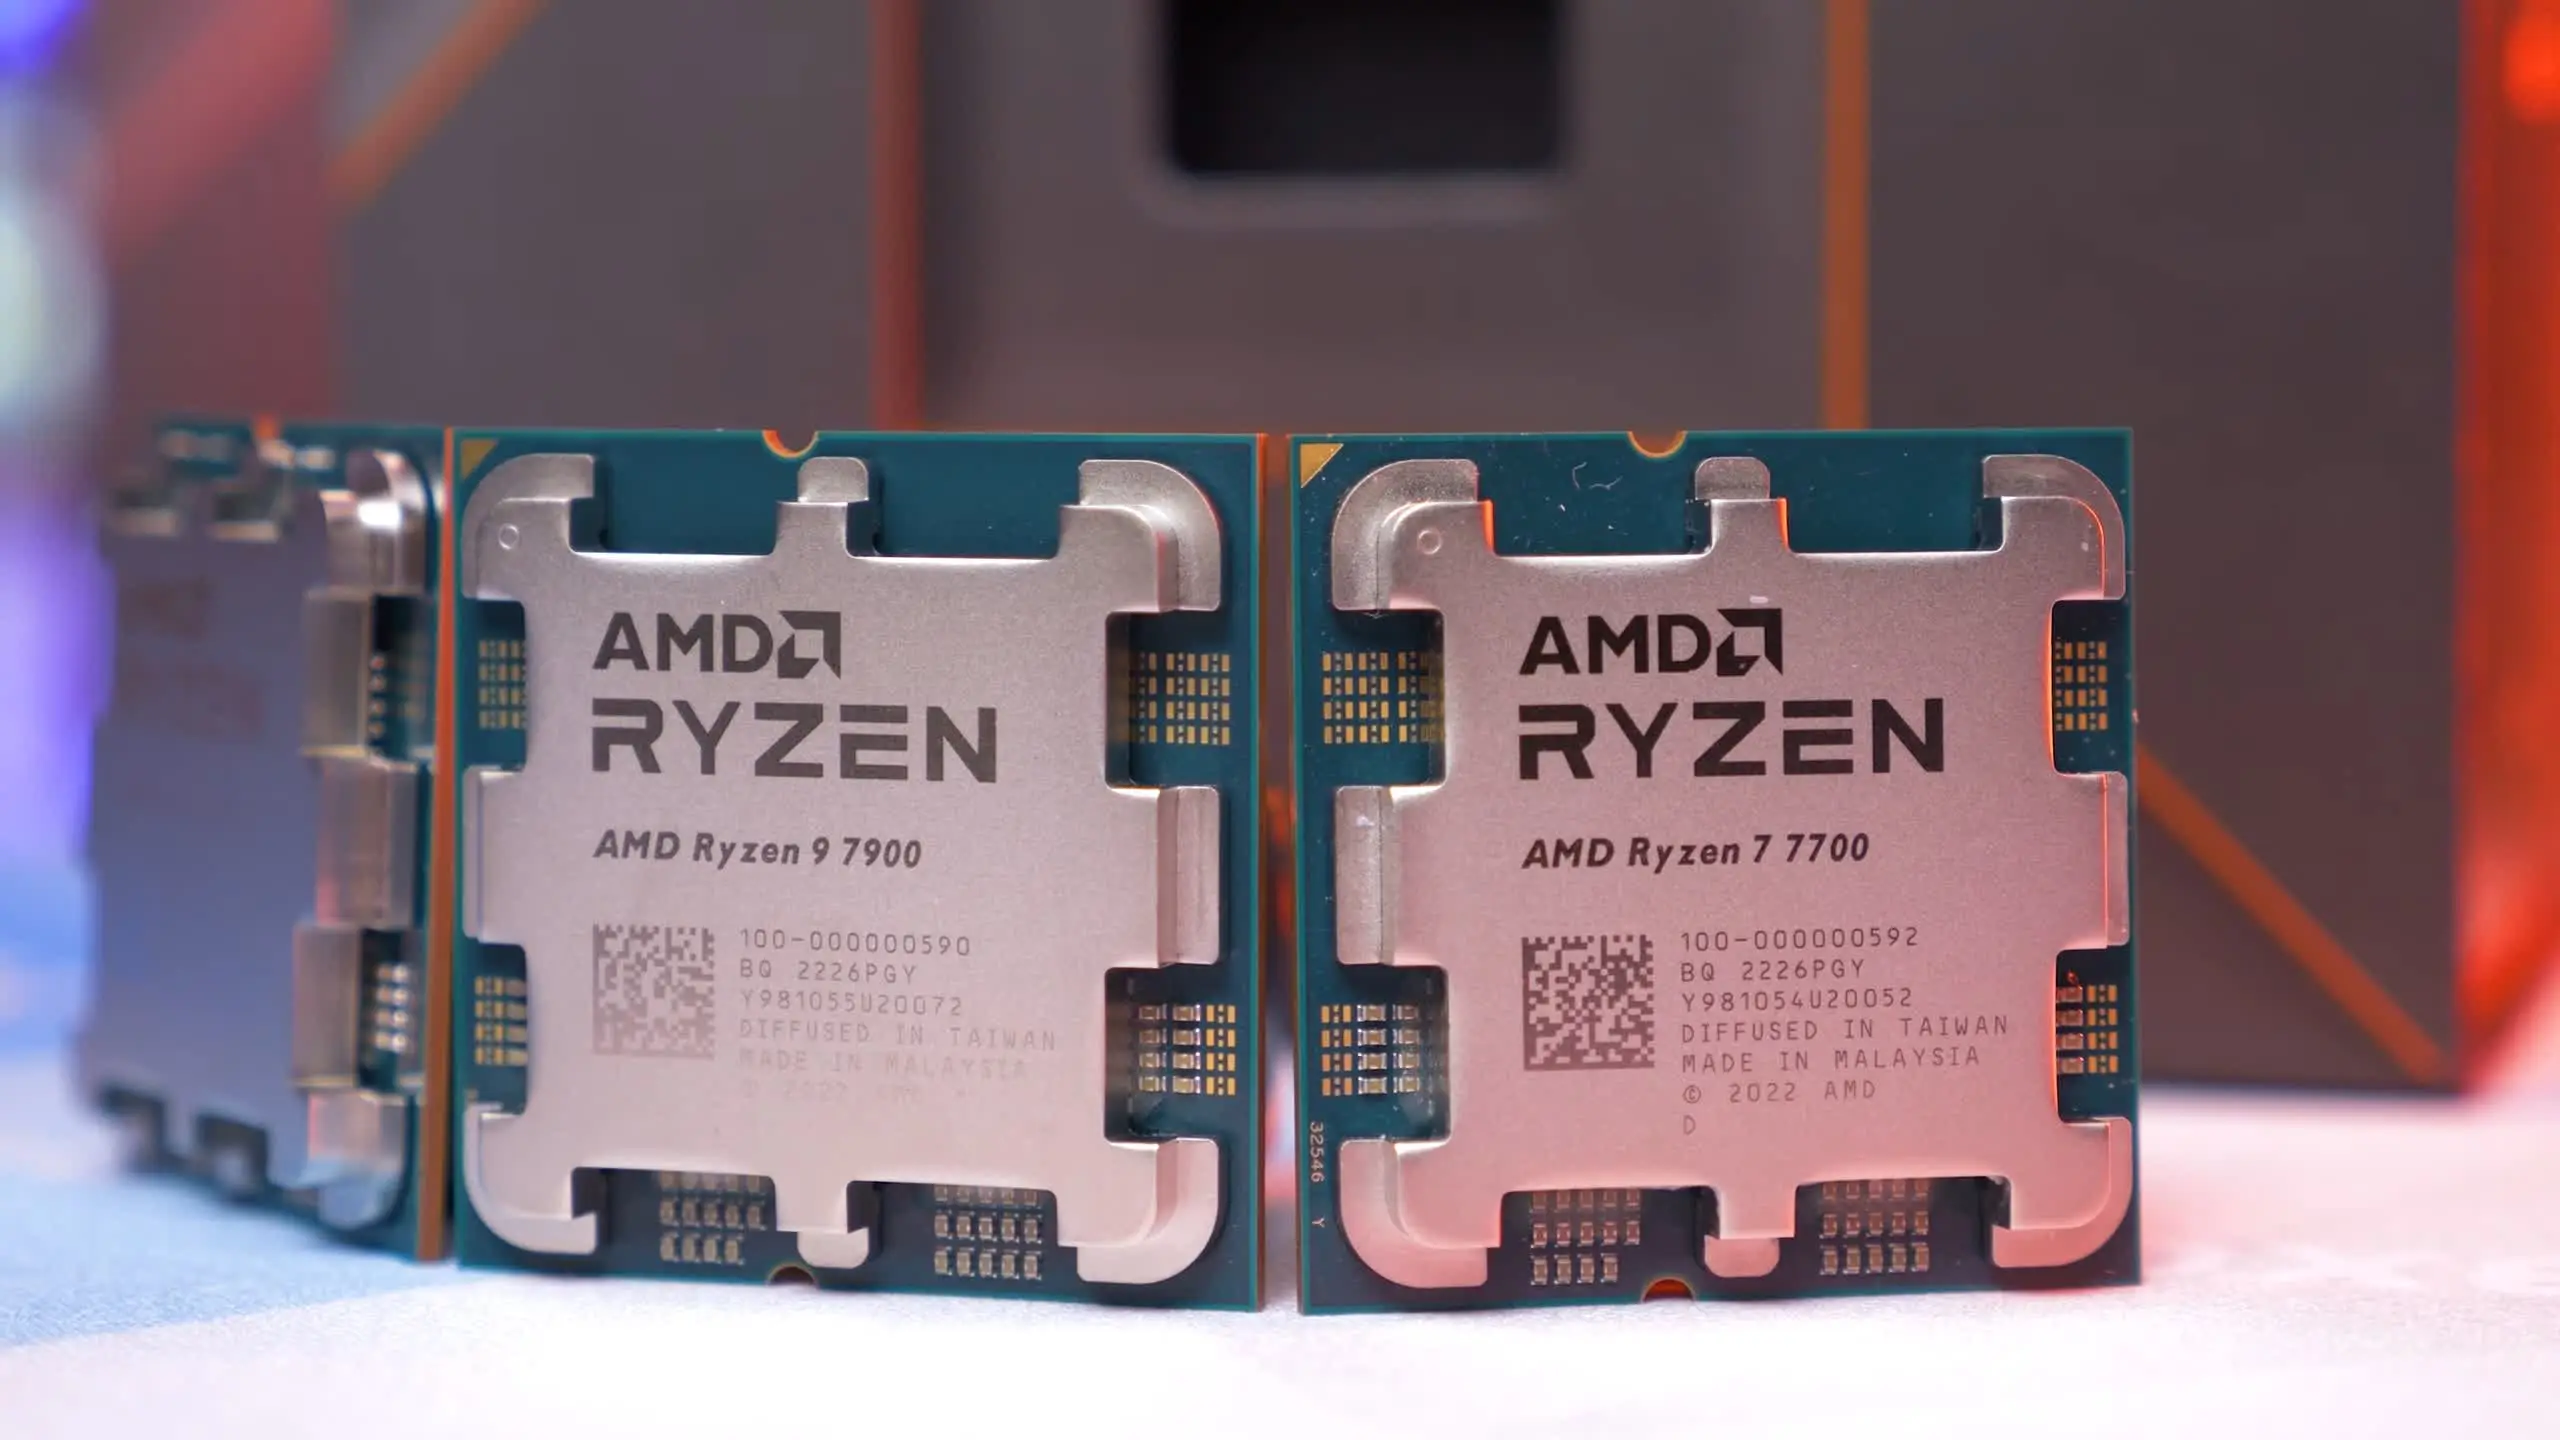 AMD Ryzen 5 7600, Ryzen 7 7700, Ryzen 9 7900 Performance and Value